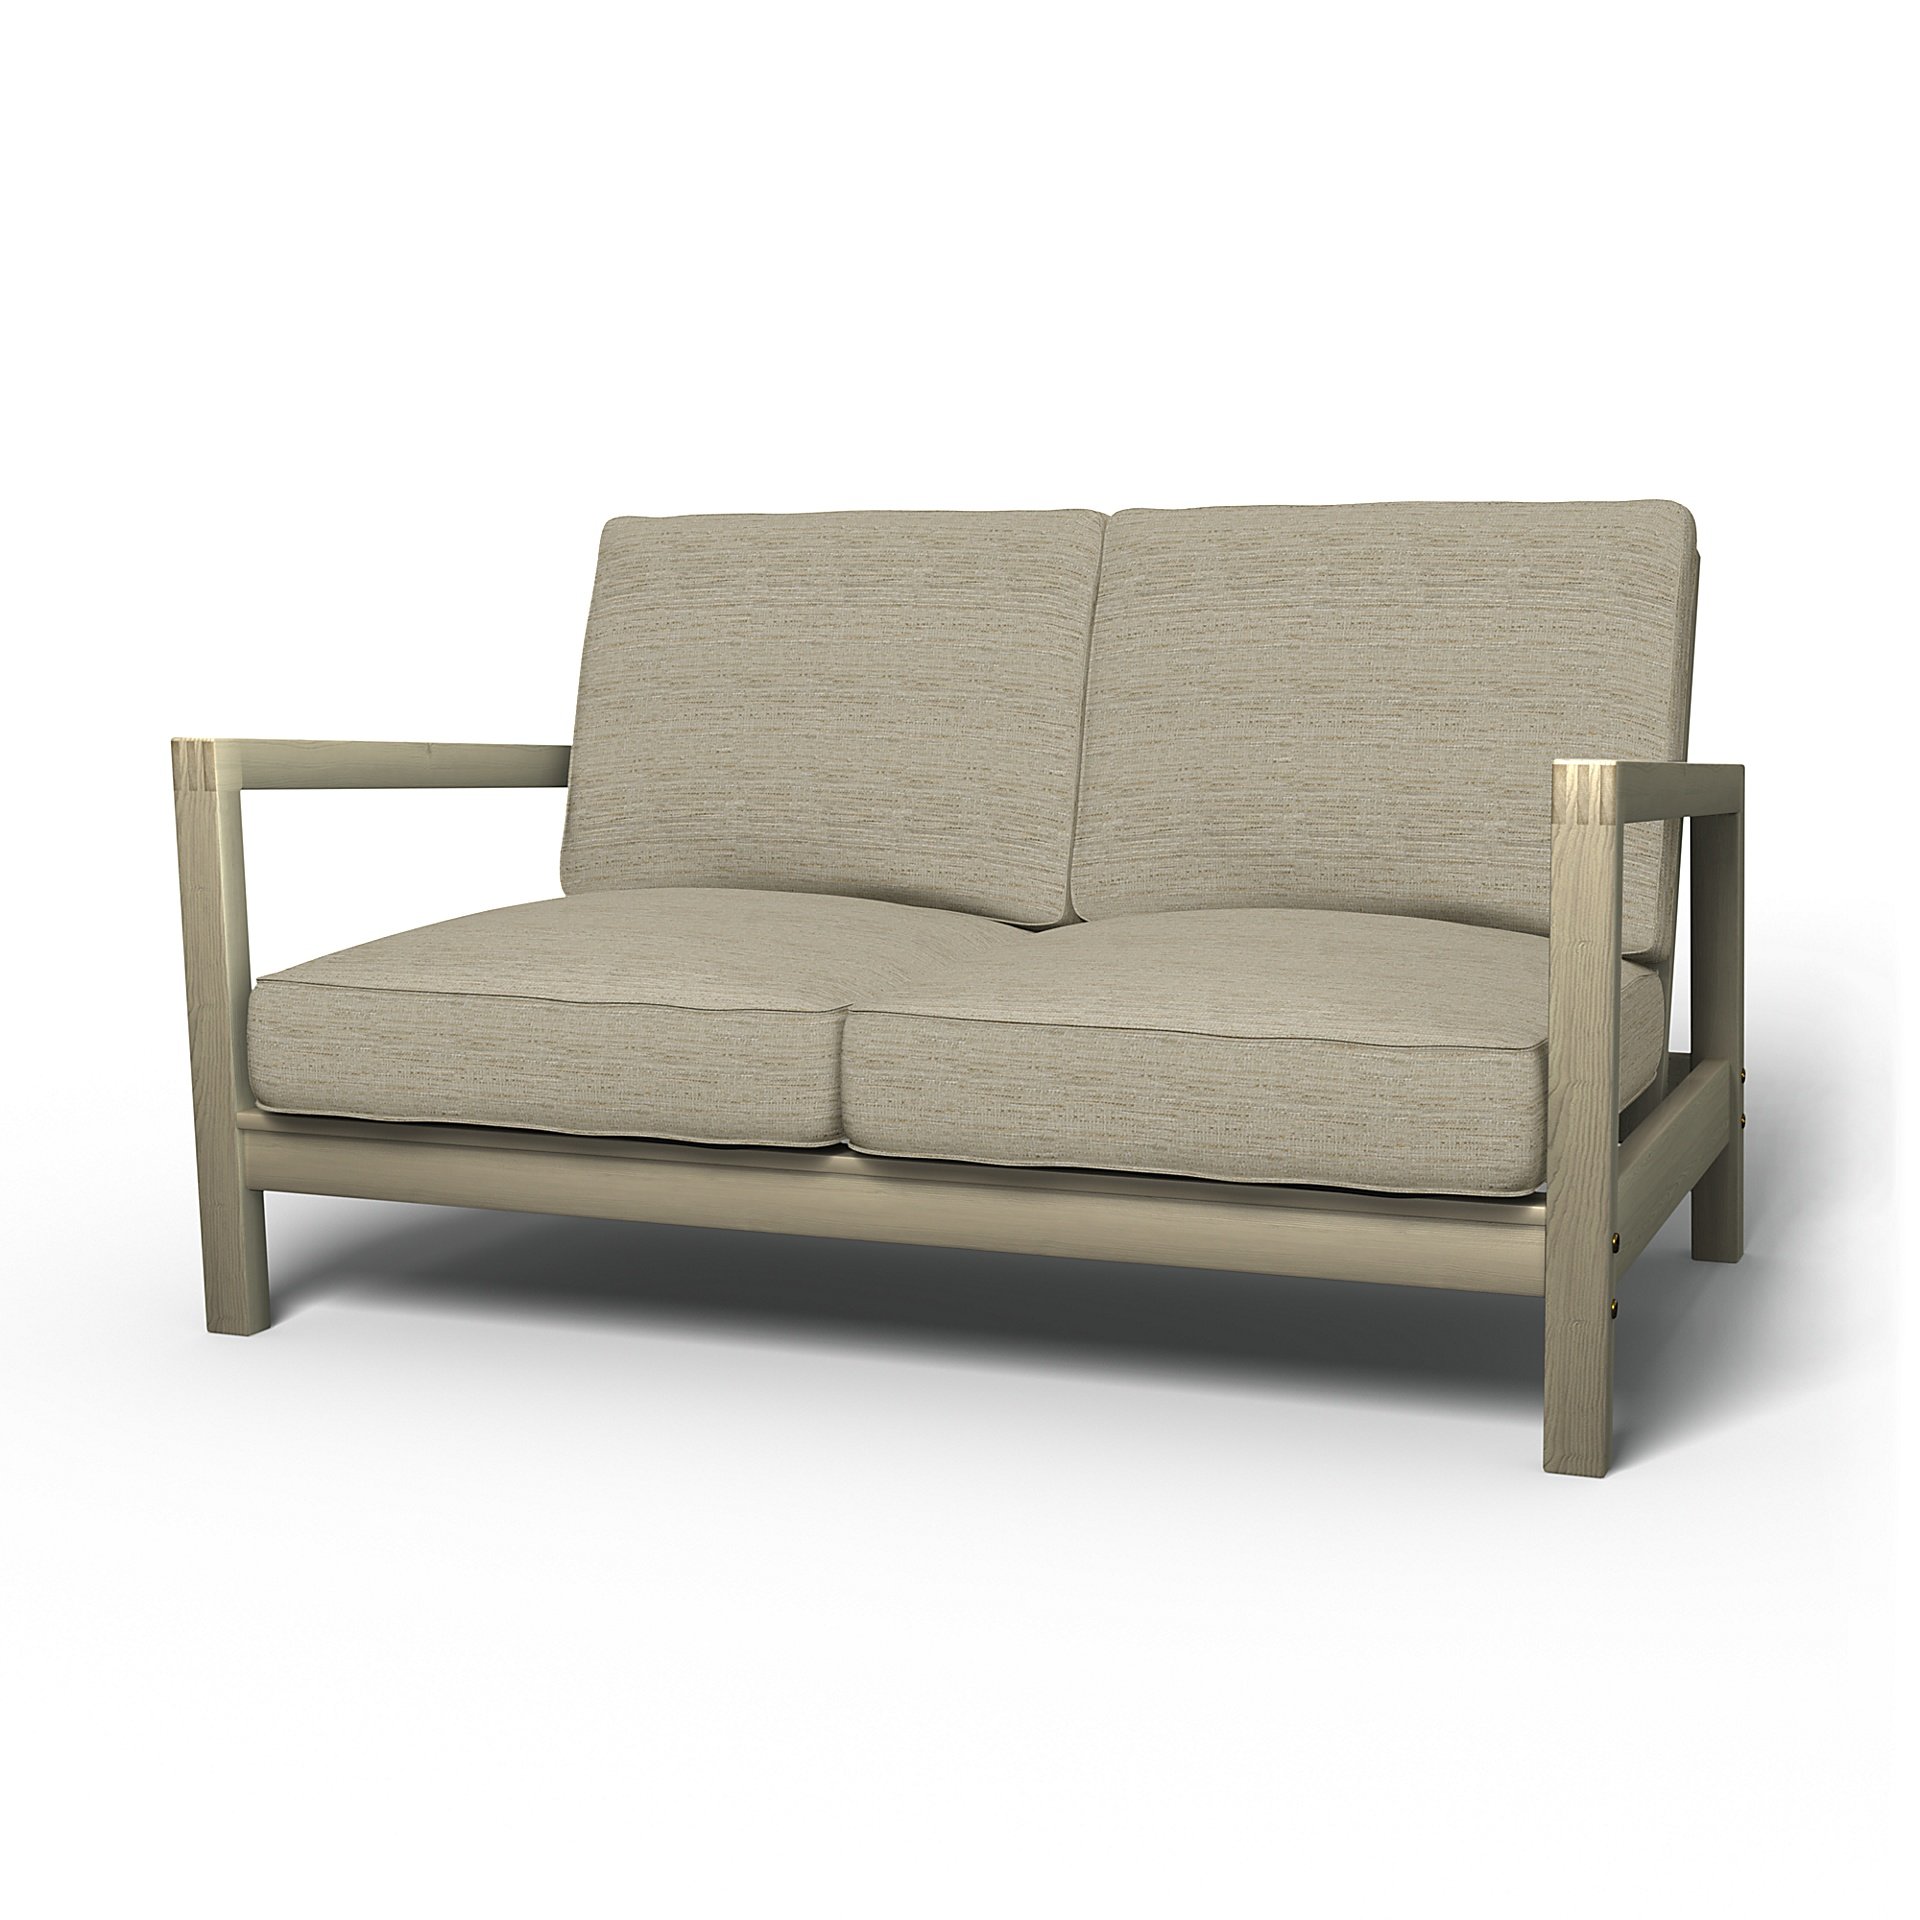 IKEA - Lillberg 2 Seater Sofa Cover, Light Sand, Boucle & Texture - Bemz